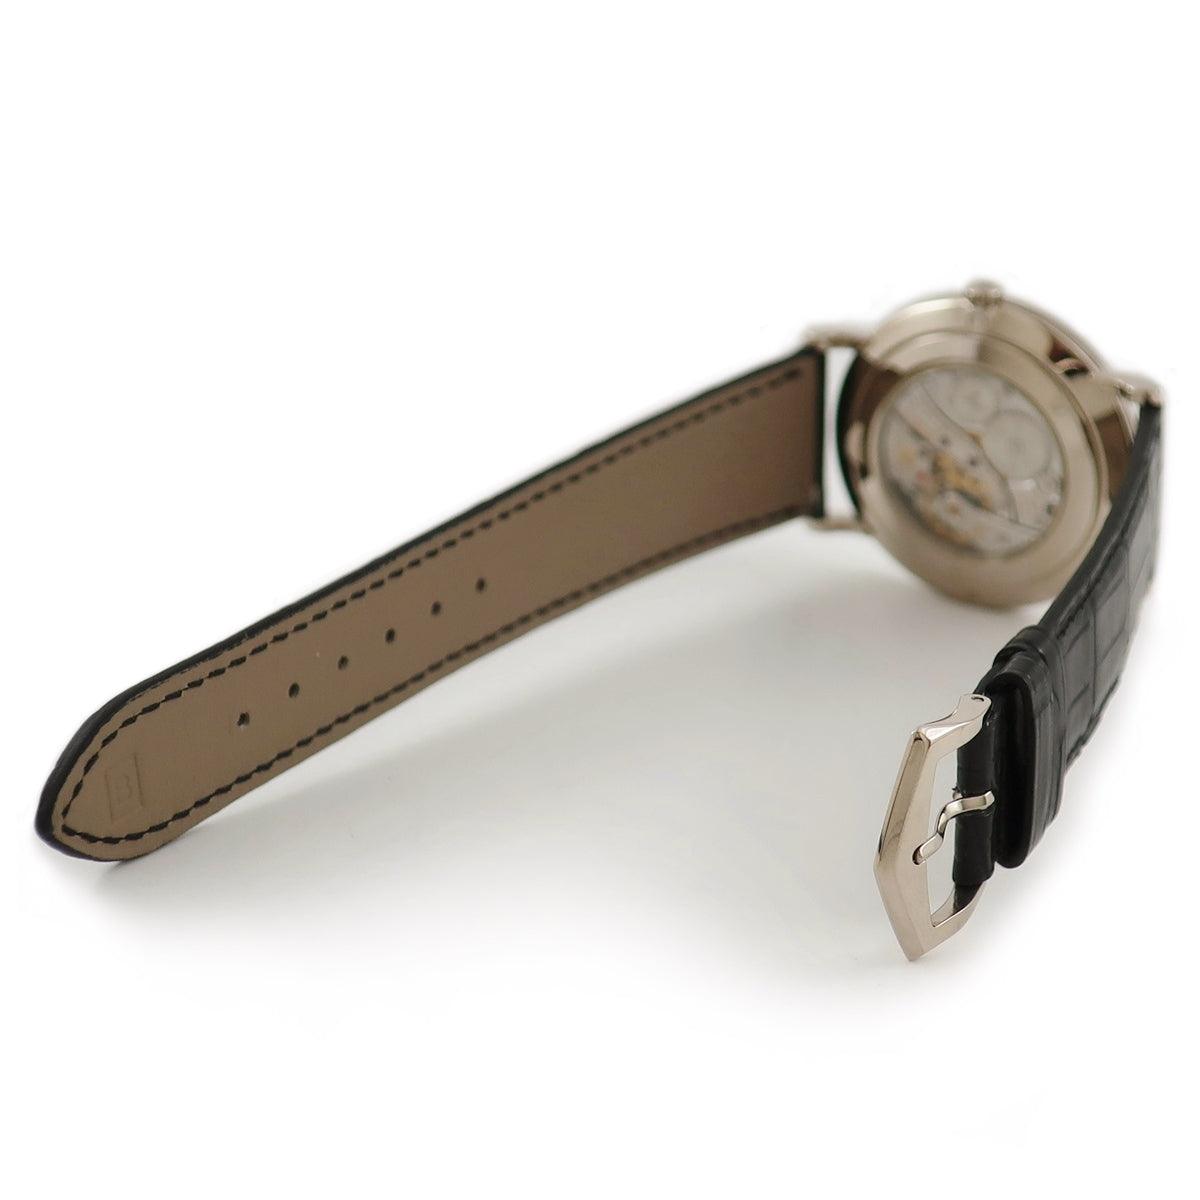 Patek Philippe Calatrava 5119G-001 K18WG Solid White Roman Clous de Paris Bezel Manual Winding Men's Watch - Murphy Johnson Watches Co.